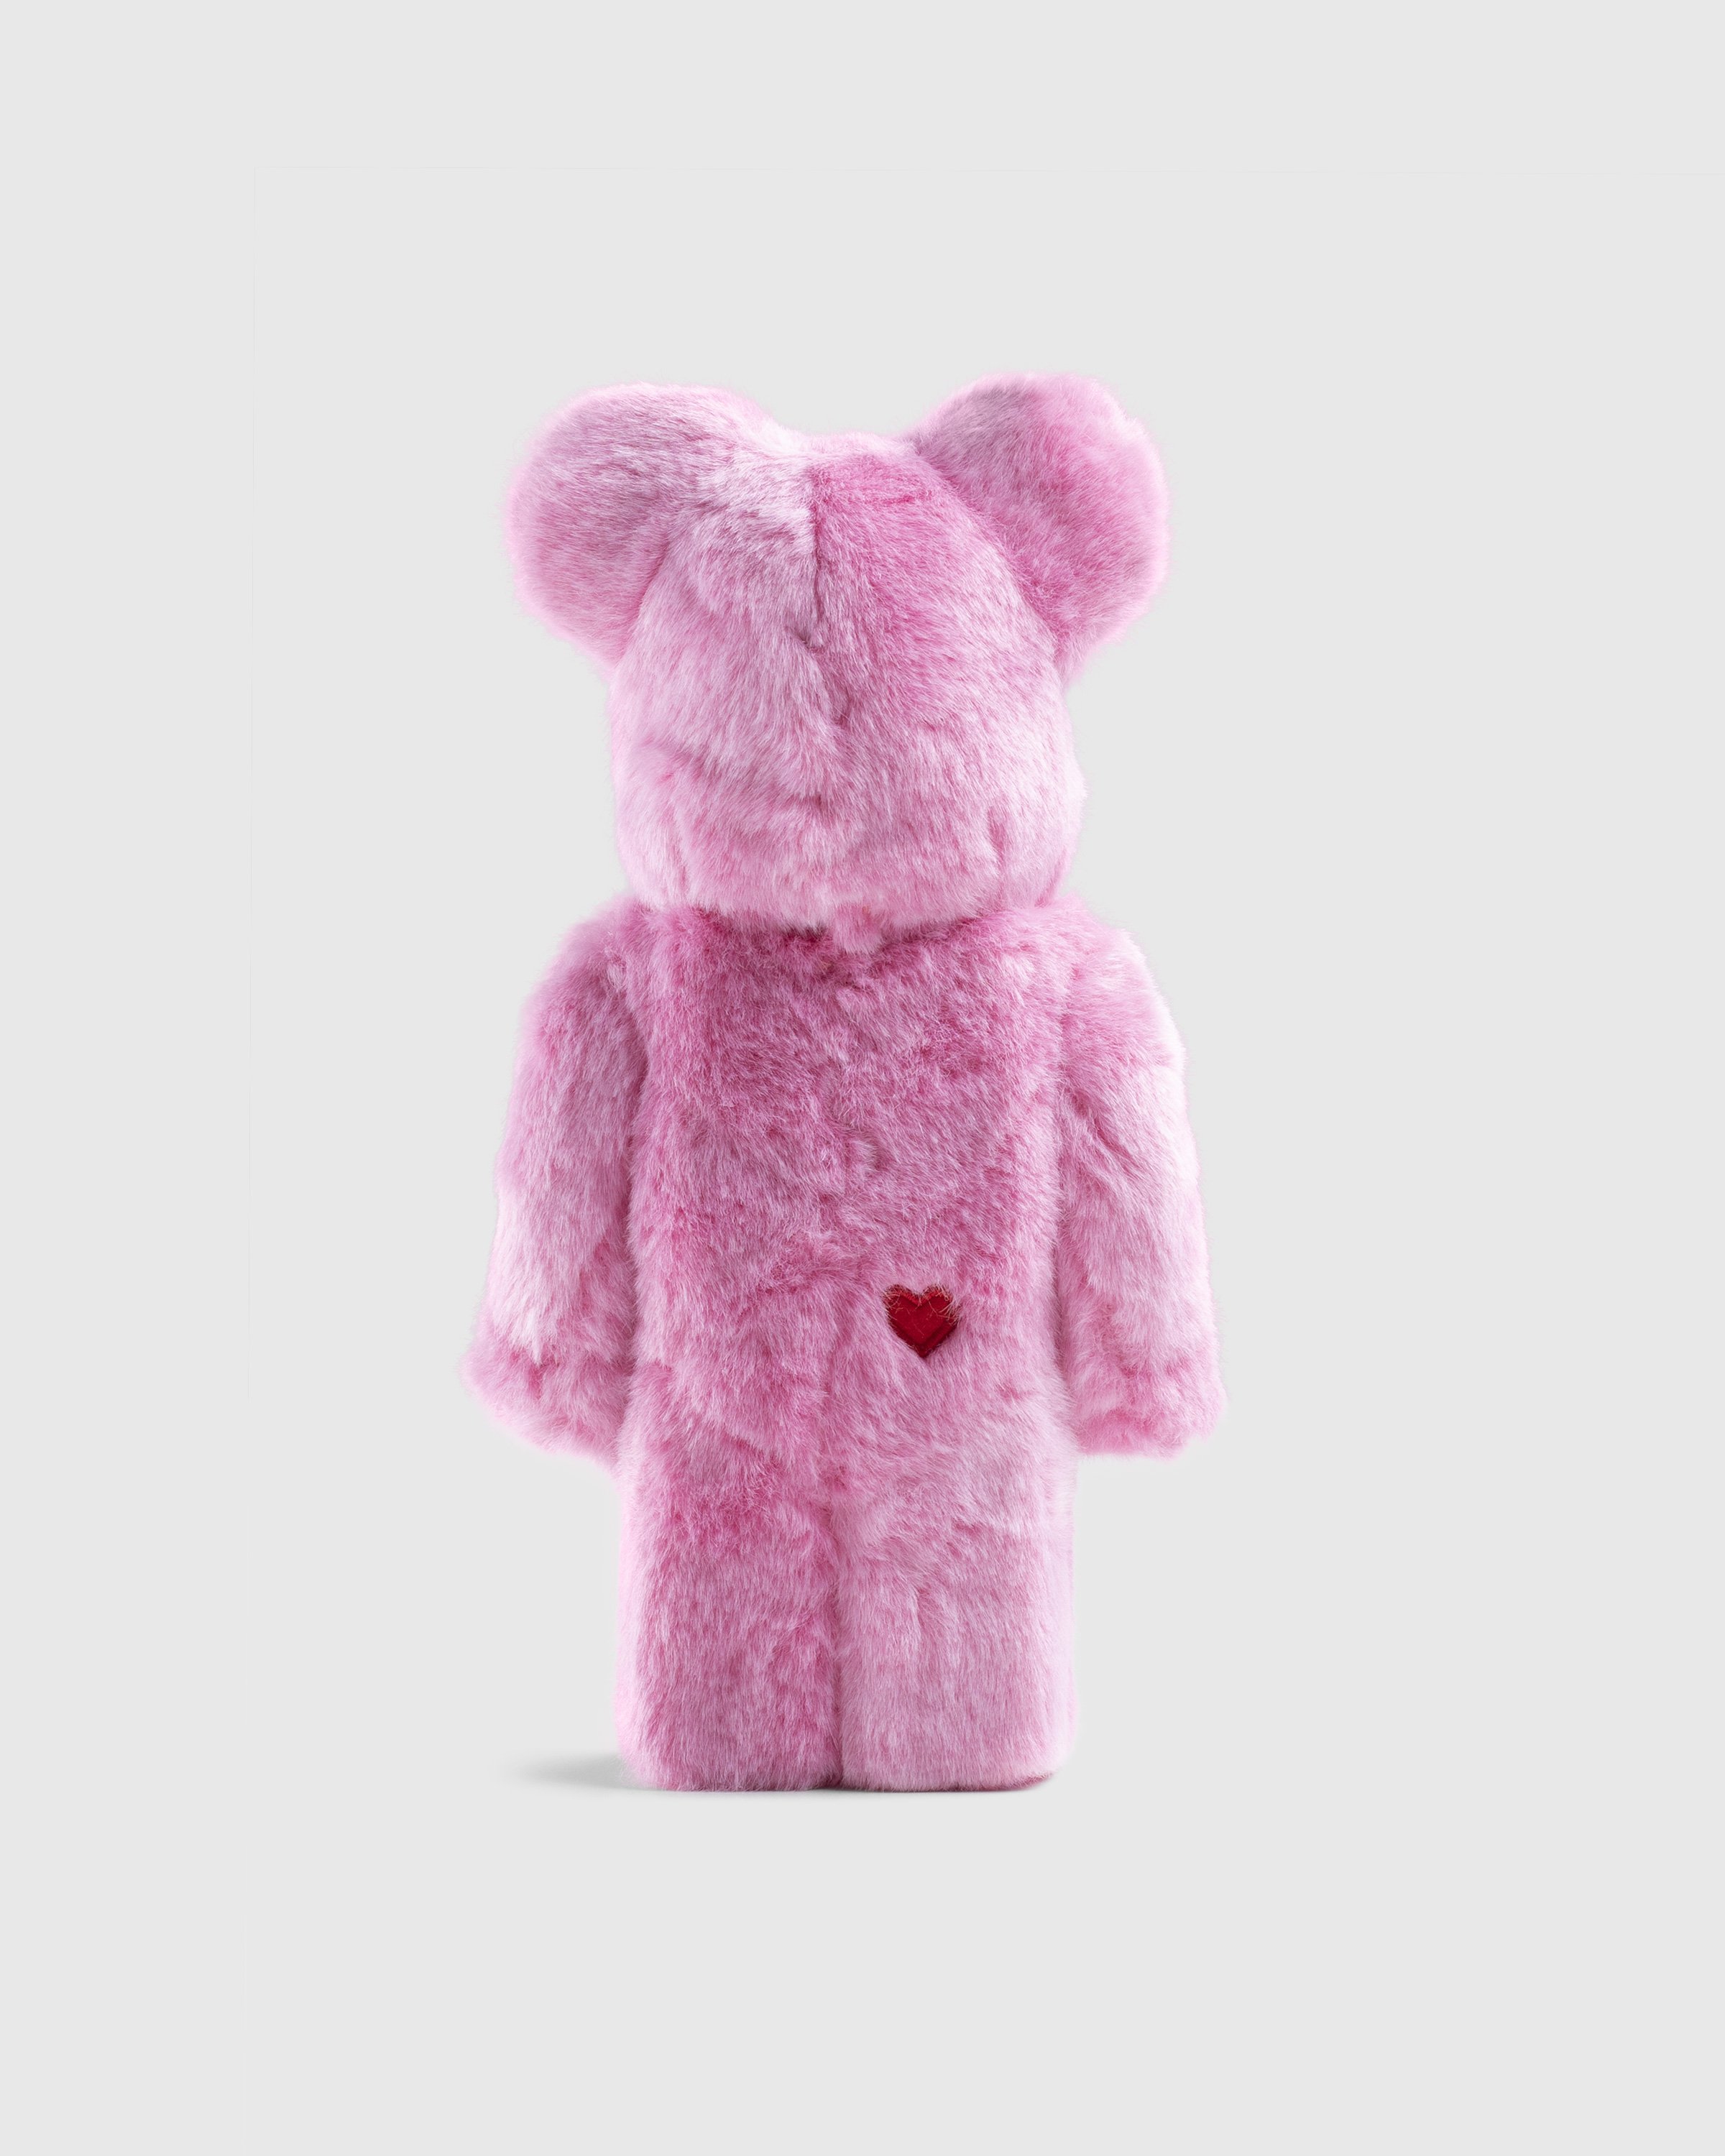 Medicom - Be@rbrick Cheer Bear Costume Version 400% Pink - Lifestyle - Pink - Image 2